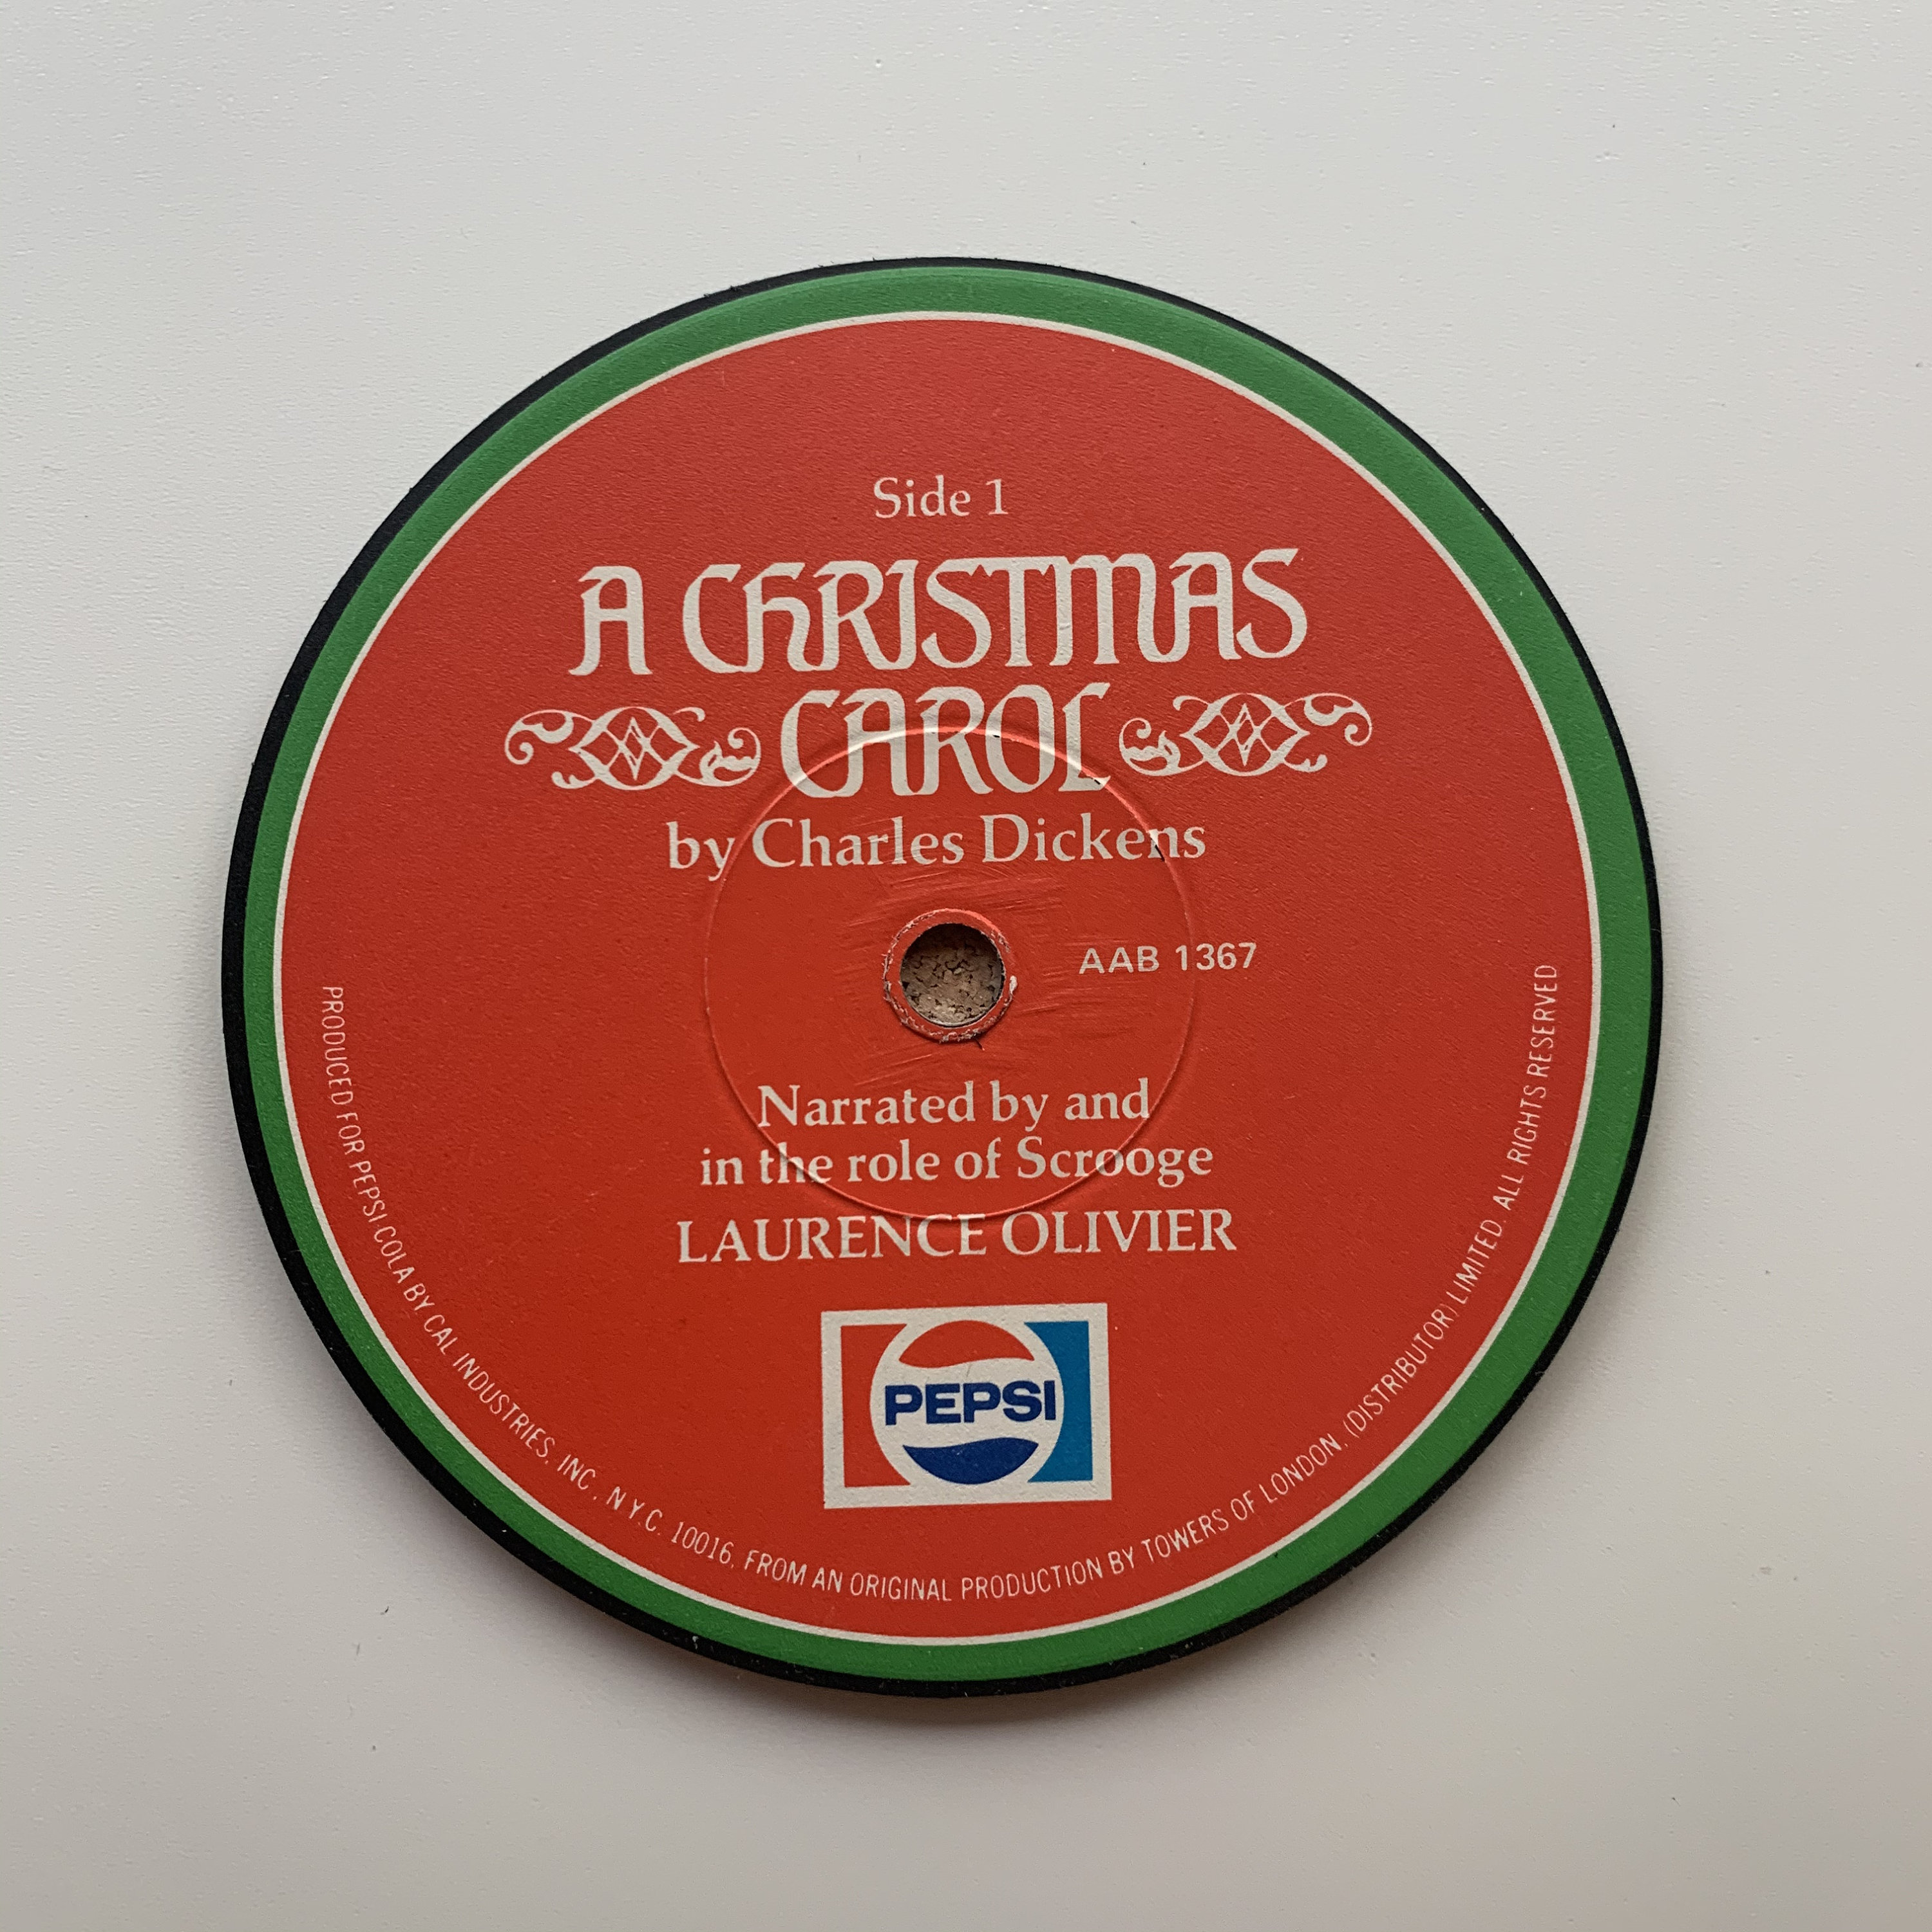 Støv fyrværkeri blotte Vintage Vinyl Record Coasters Set You Pick 4 Christmas & - Etsy